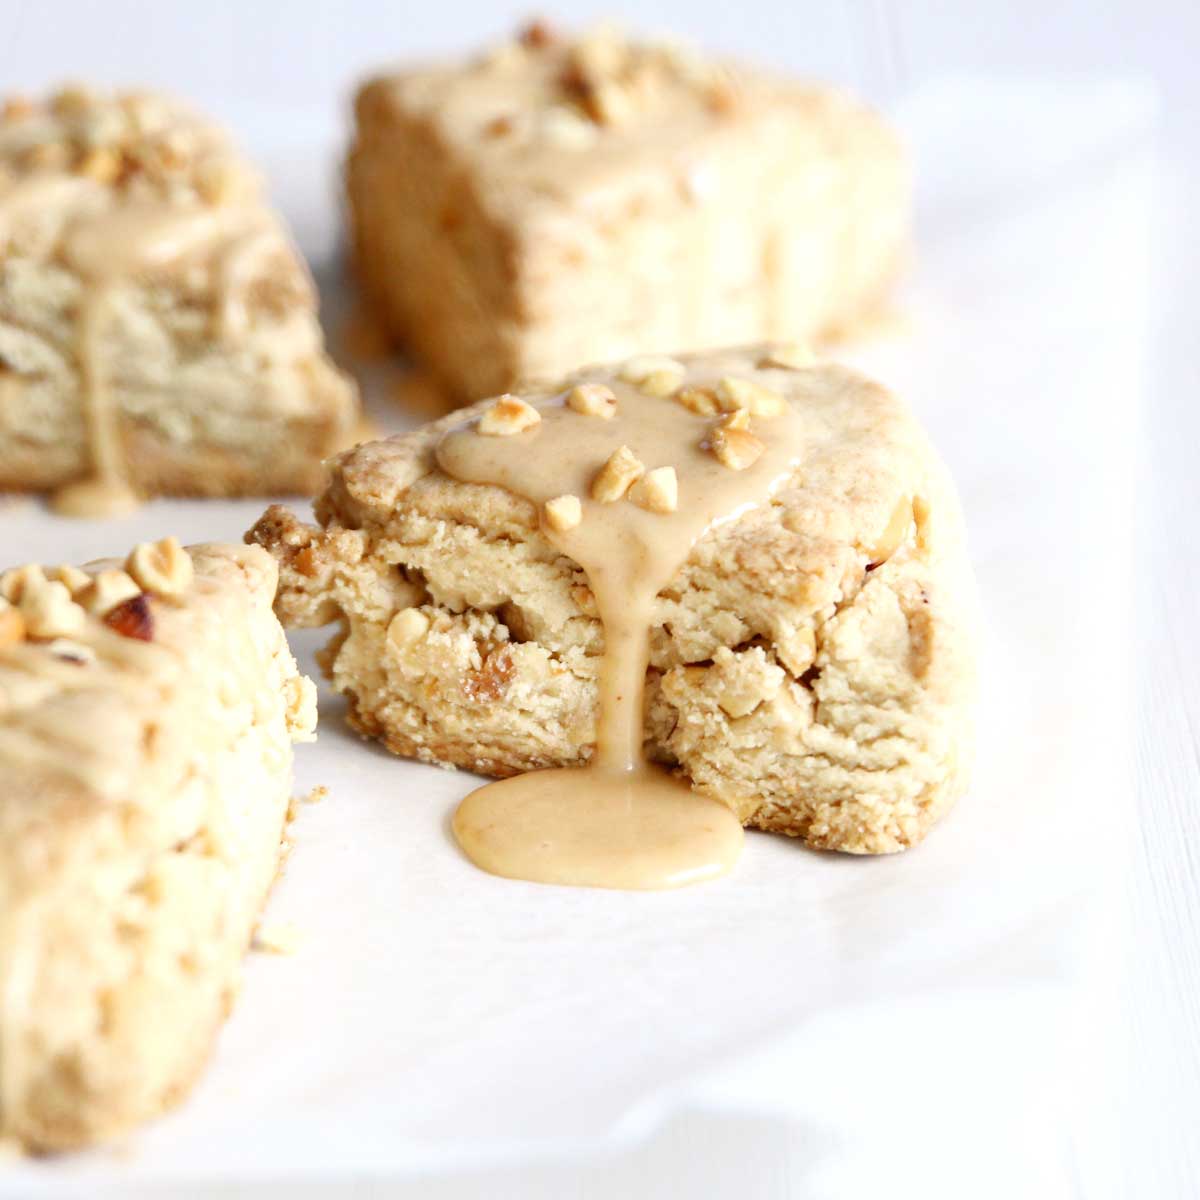 Peanut Butter Scones with a Creamy Glaze: Vegan and Irresistibly Nutty - Cauliflower Everything Bagel Scones